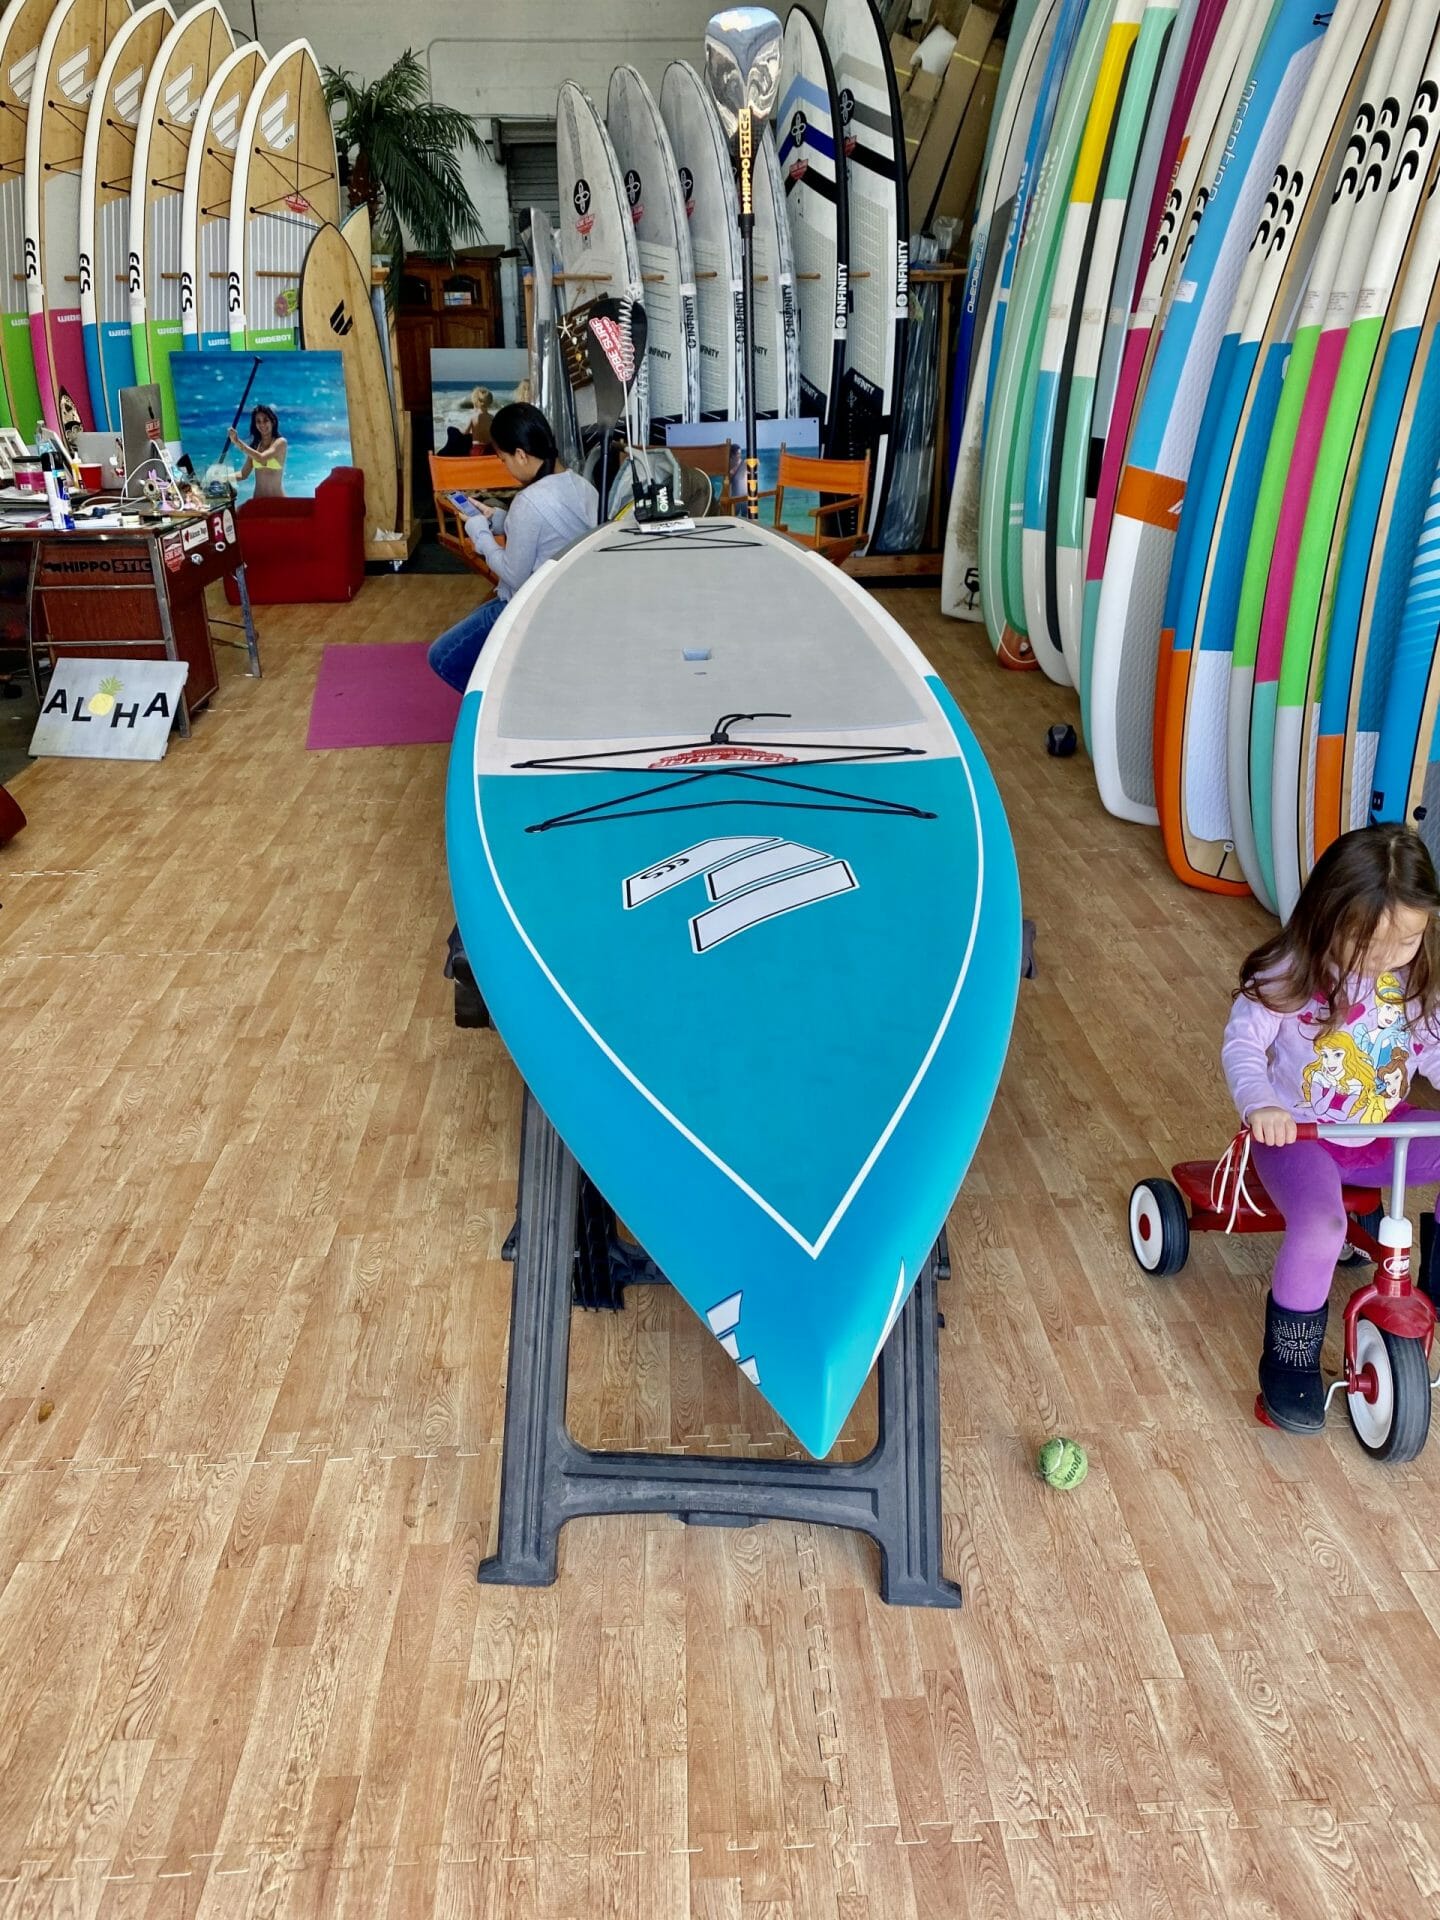 SoBe Surf Paddle Board Shop Florida Cocoa Beach Merritt Island Miami Owner Girard Middleton's daughter Audrey